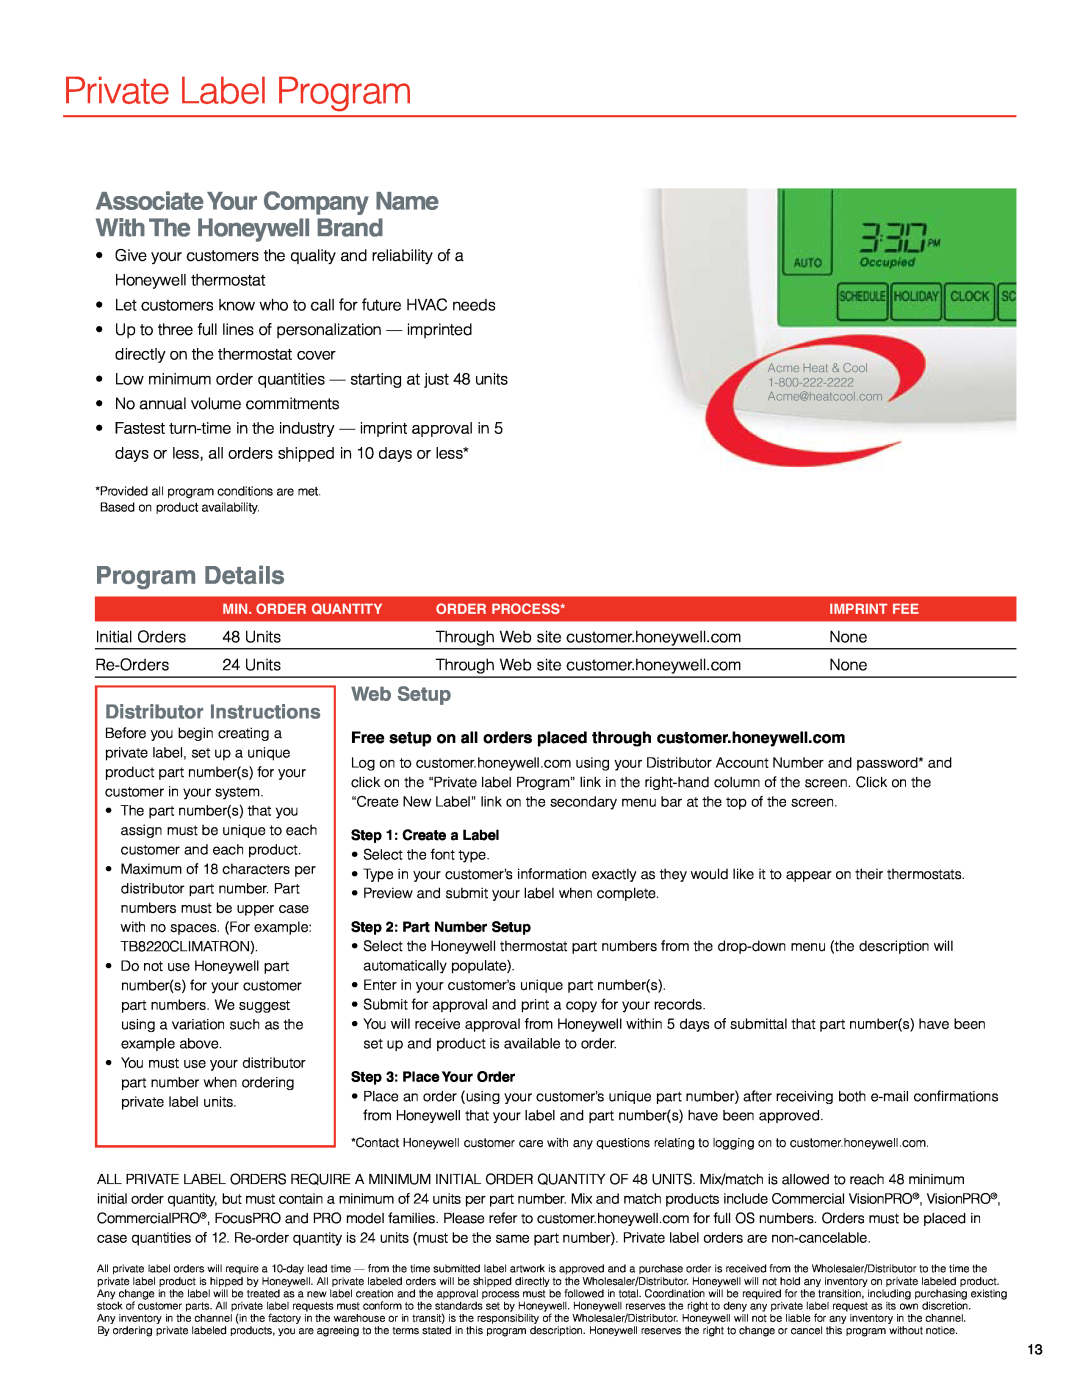 White Rodgers T7351F, T7350 manual Private Label Program, Program Details, Distributor Instructions, Web Setup 